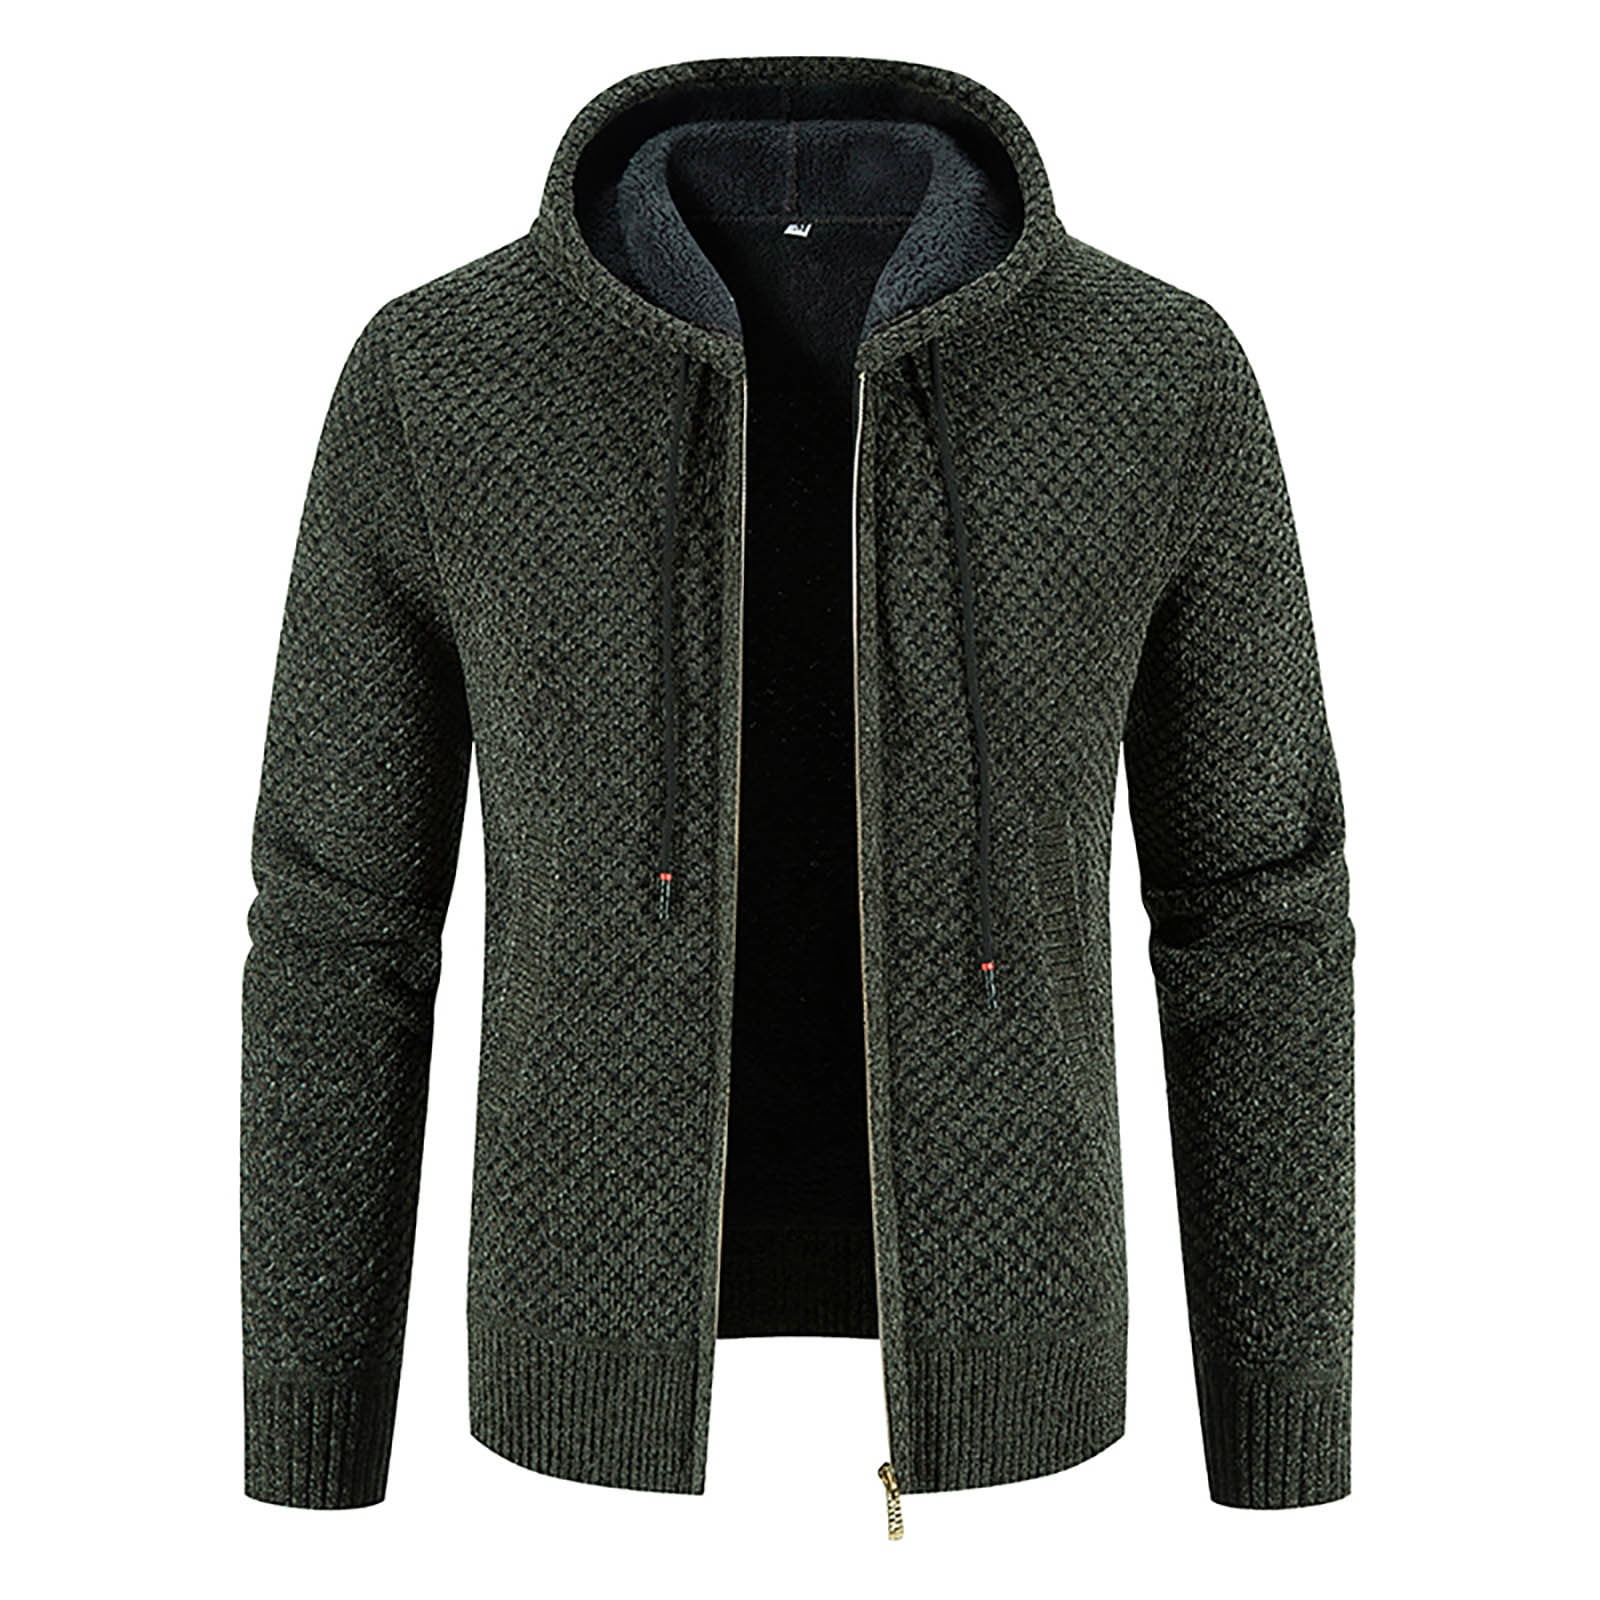 Simplmasygenix Clearance Men's Jackets Casual Vest Coat And Winter Warm ...